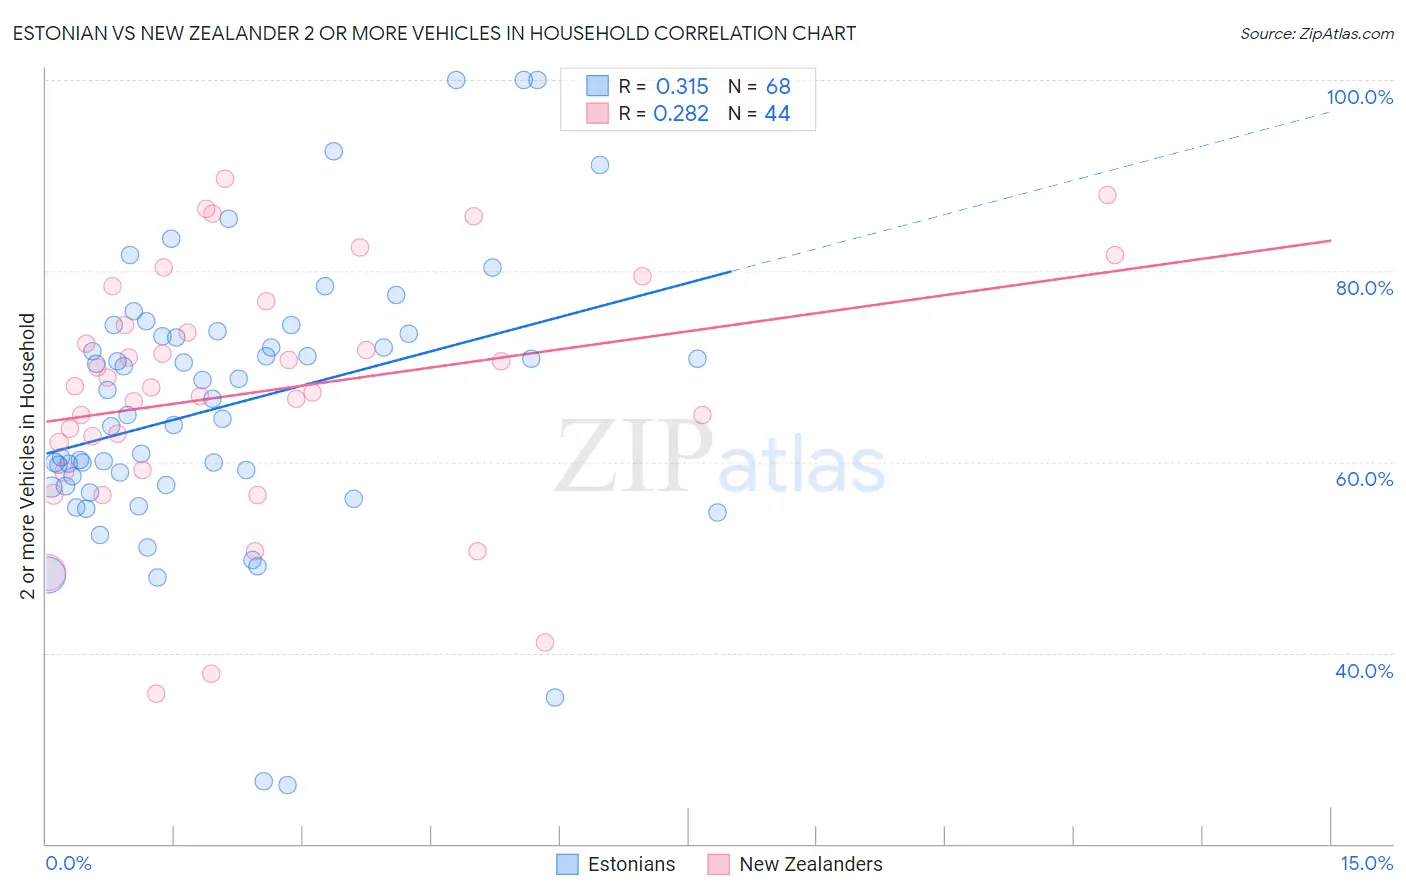 Estonian vs New Zealander 2 or more Vehicles in Household